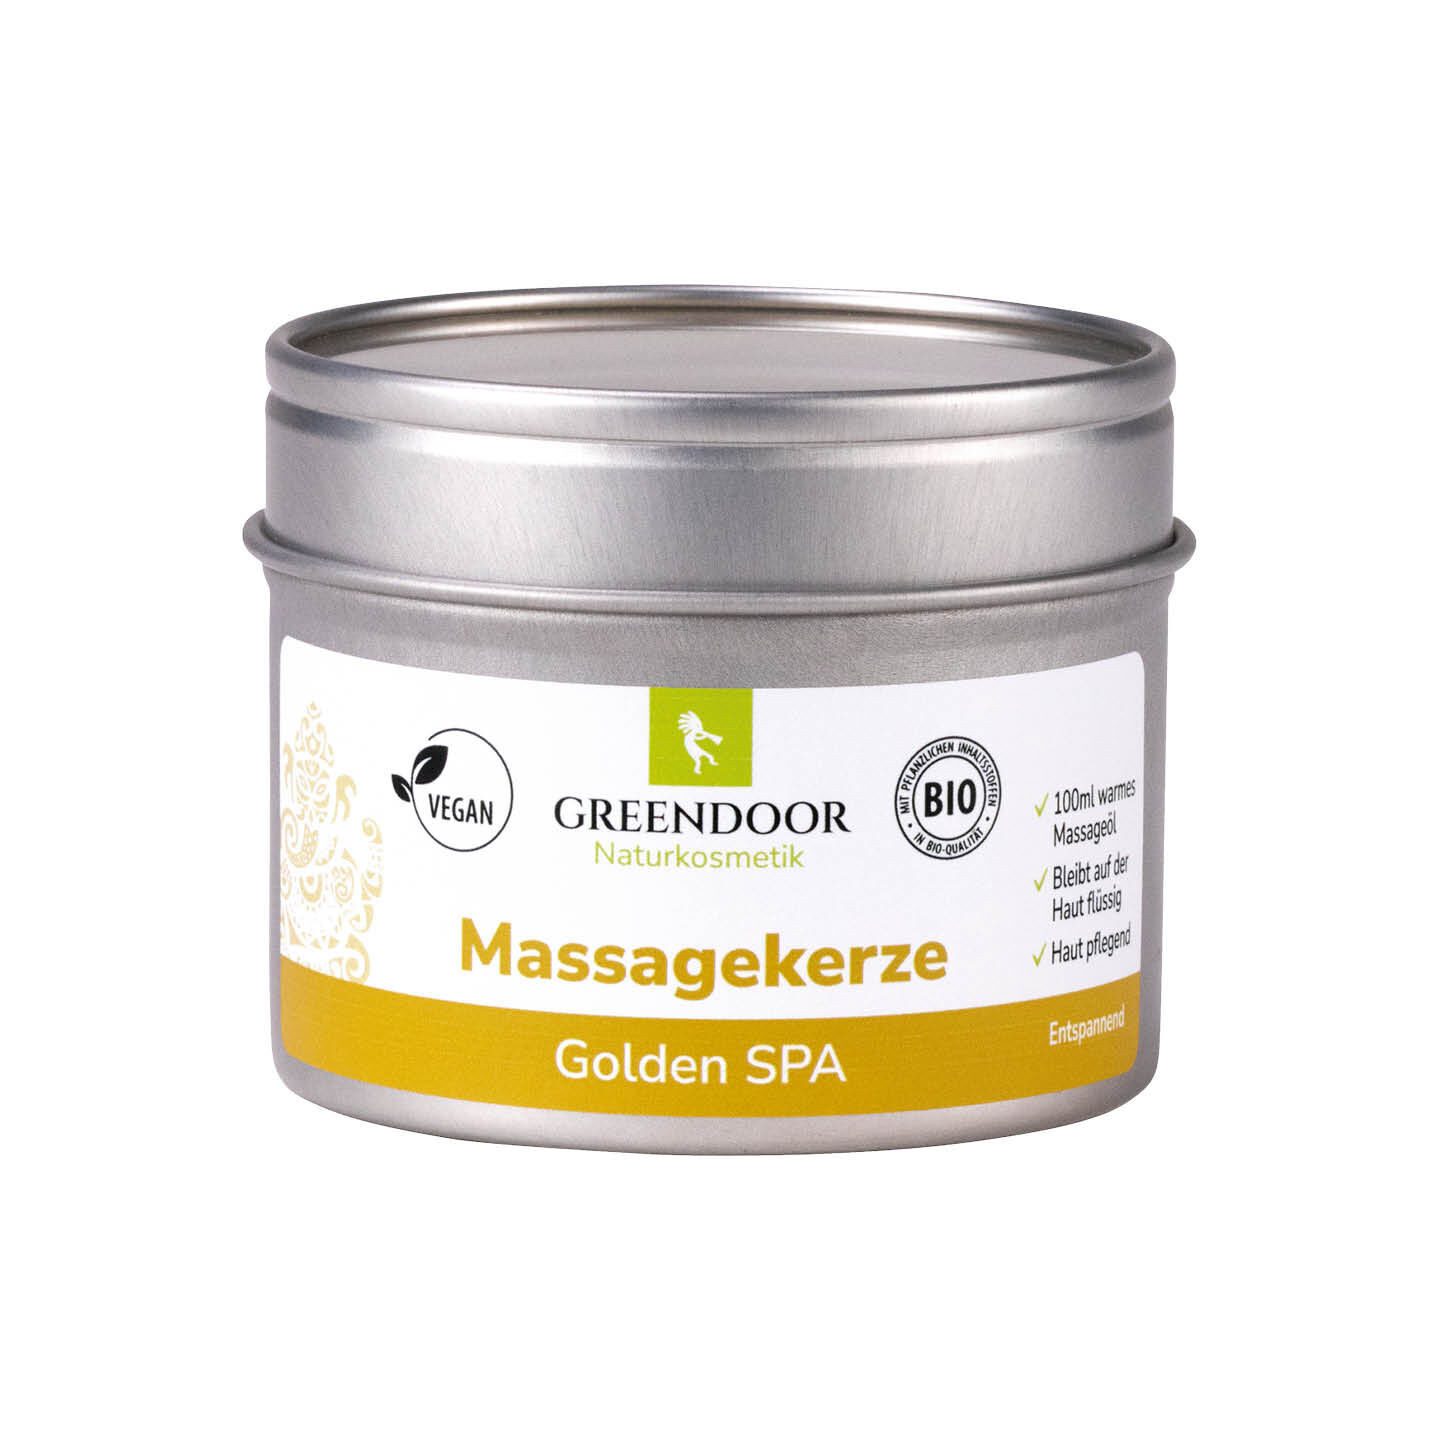 GREENDOOR Massagekerze Massagekerze Golden Spa